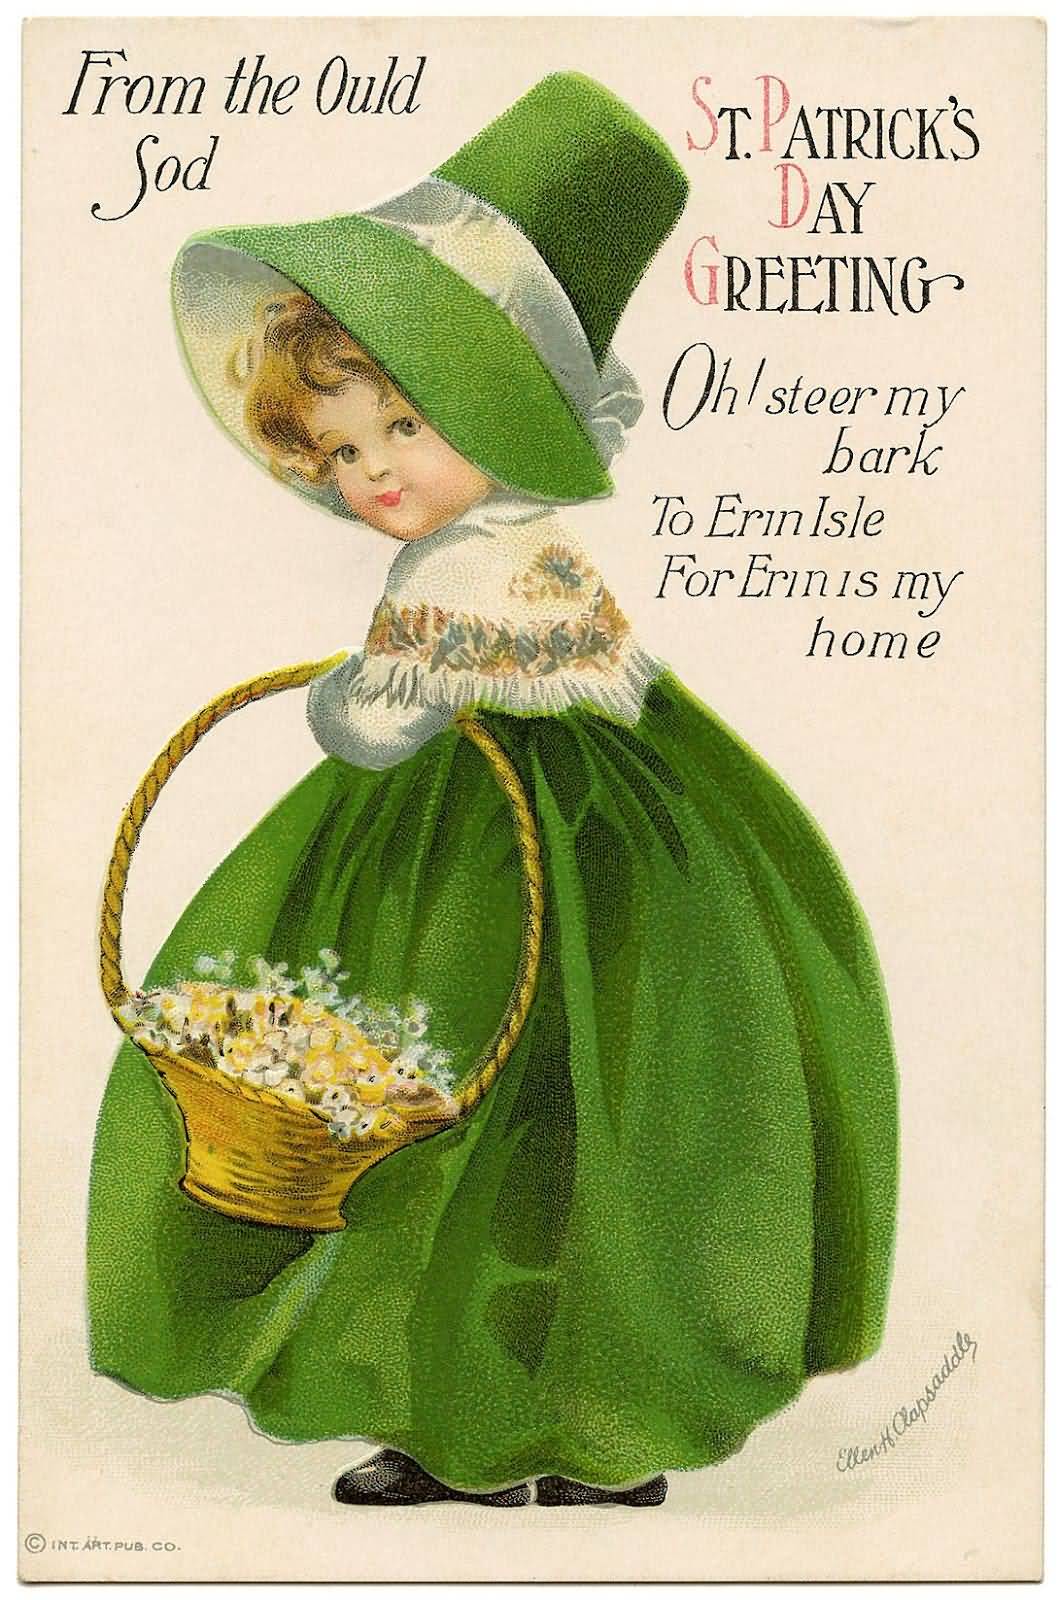 Saint Patrick’s Day Greeting